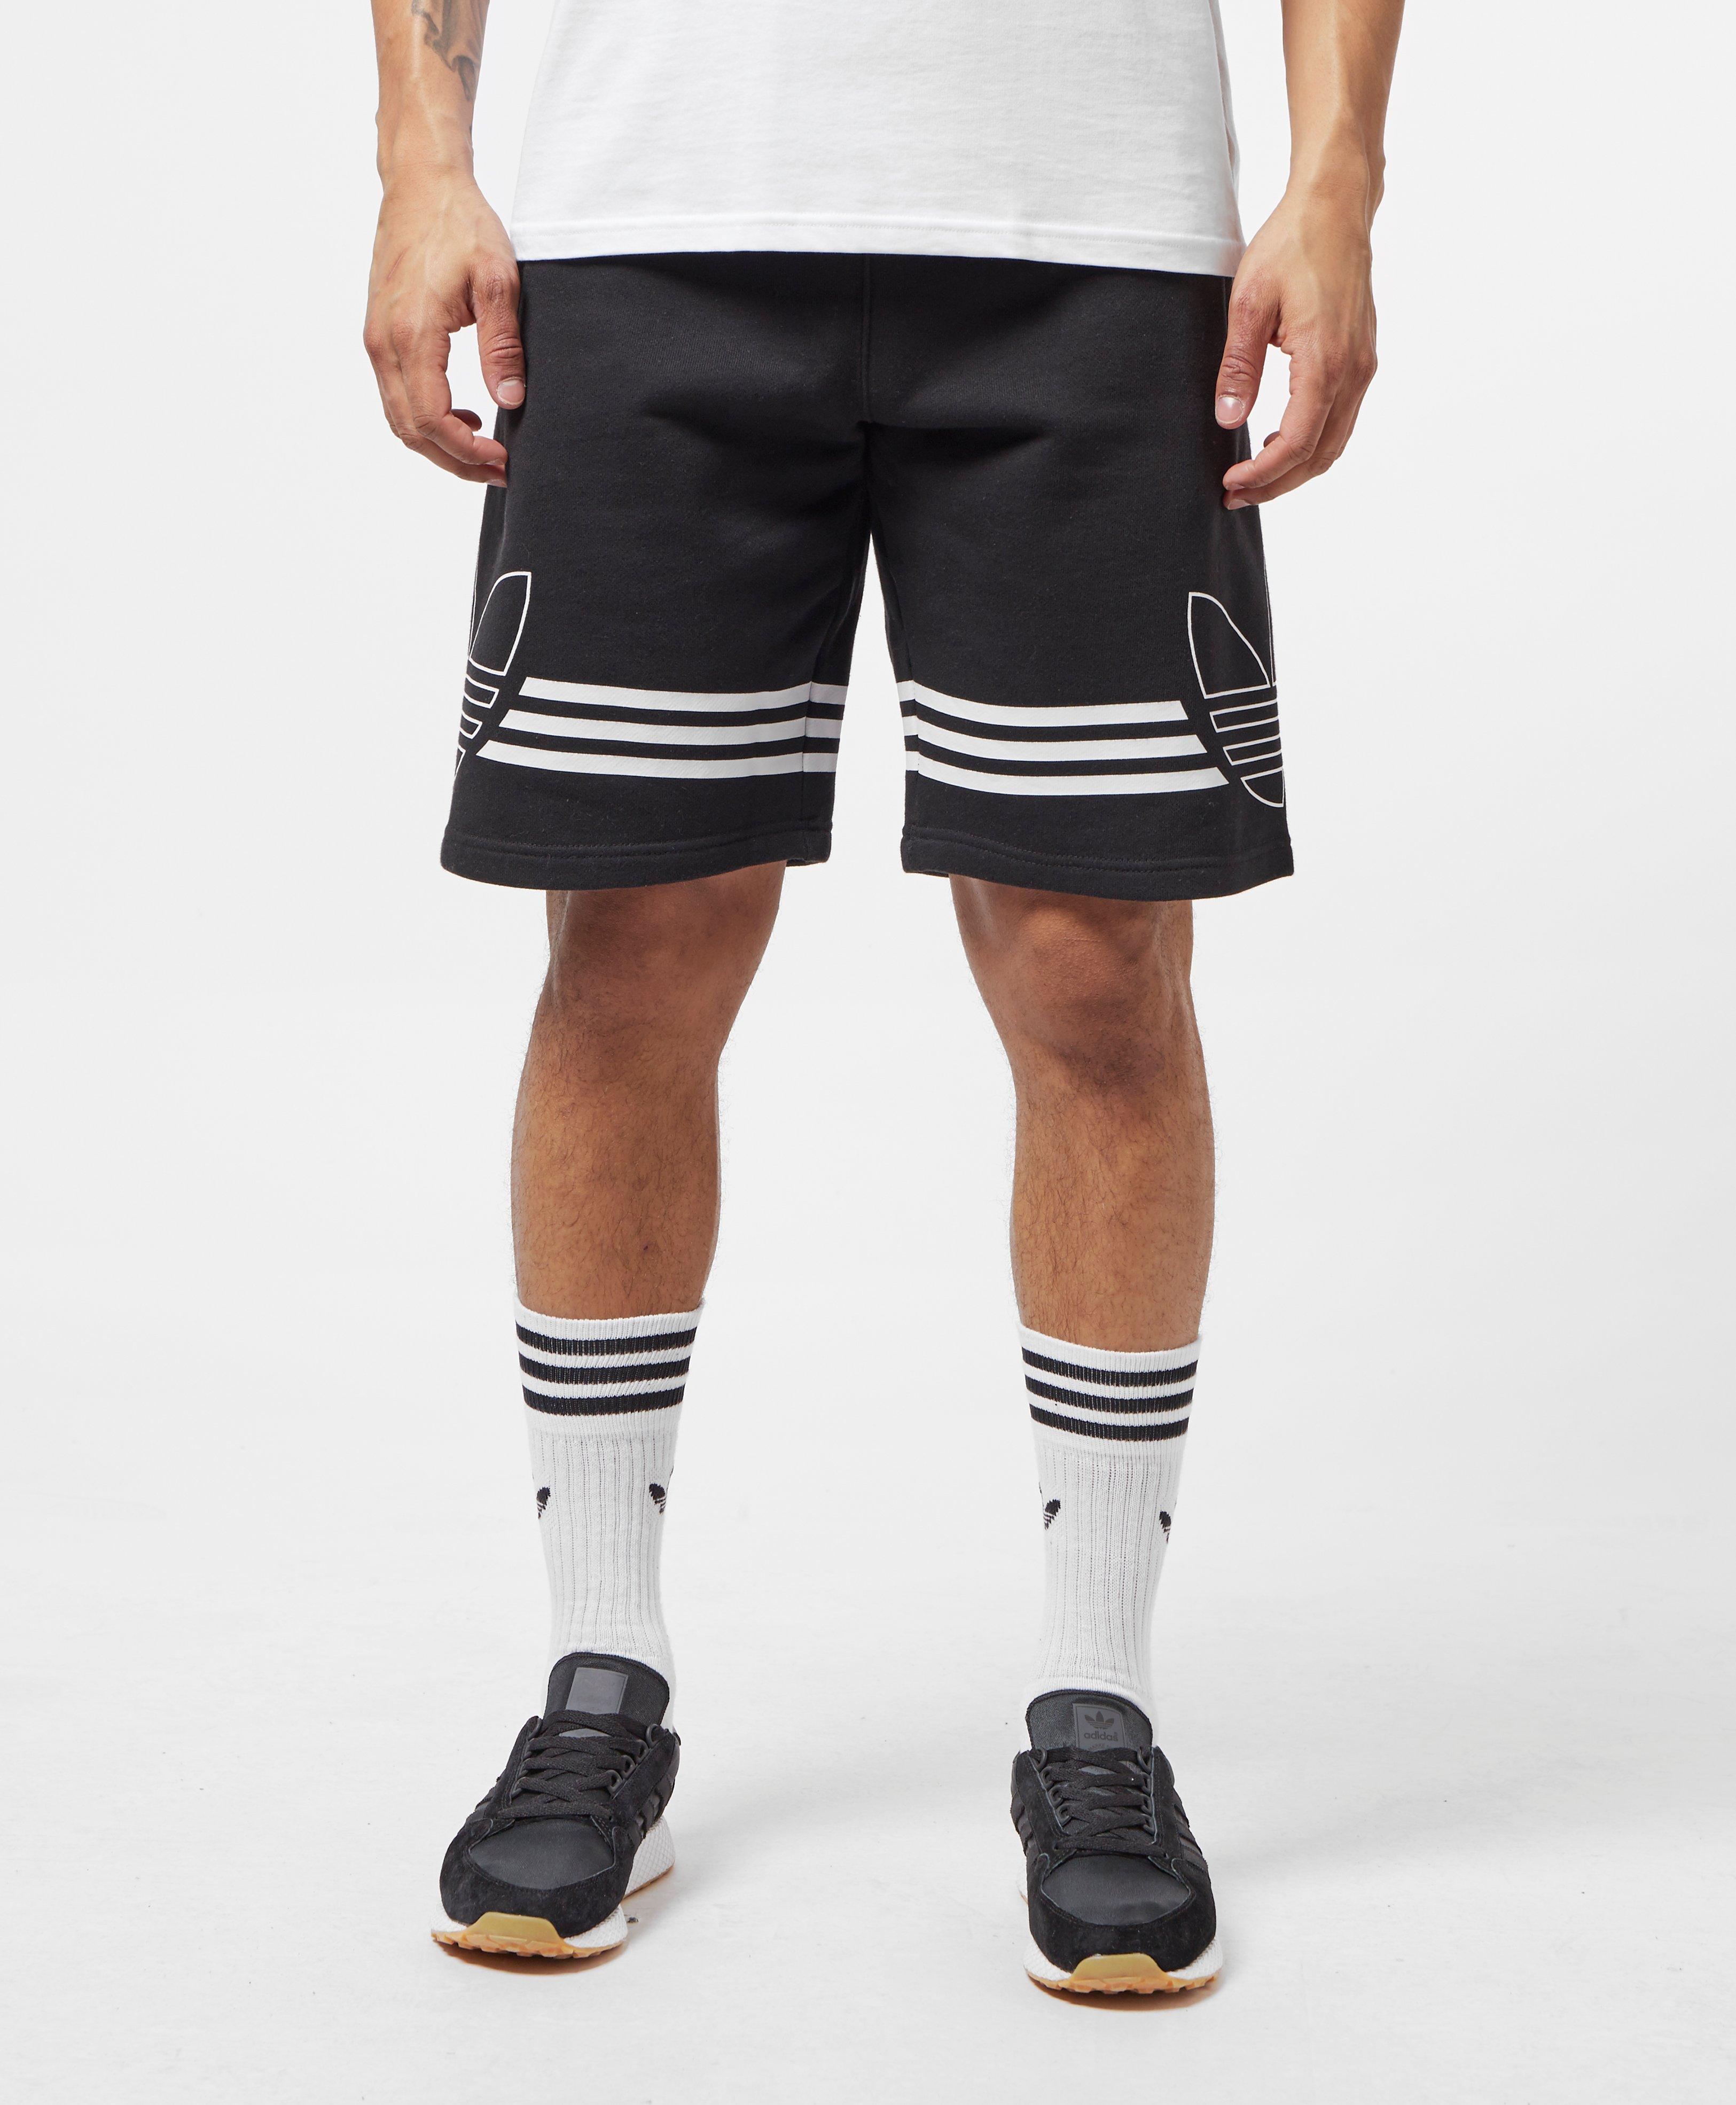 adidas radkin shorts